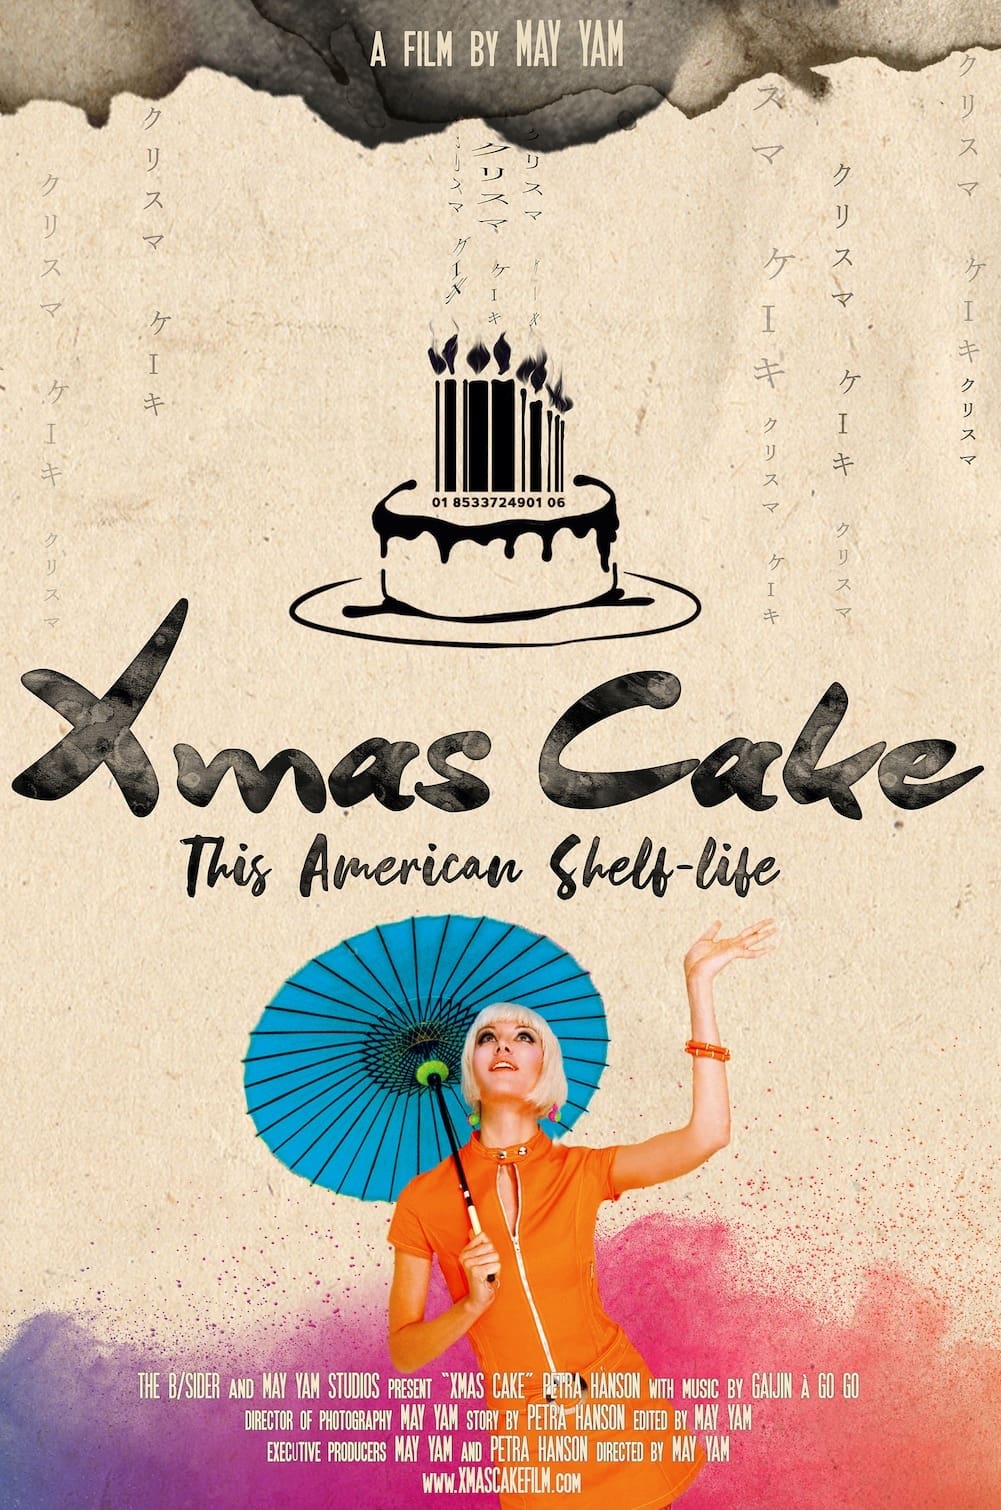 Xmas Cake – This American Shelf-Life